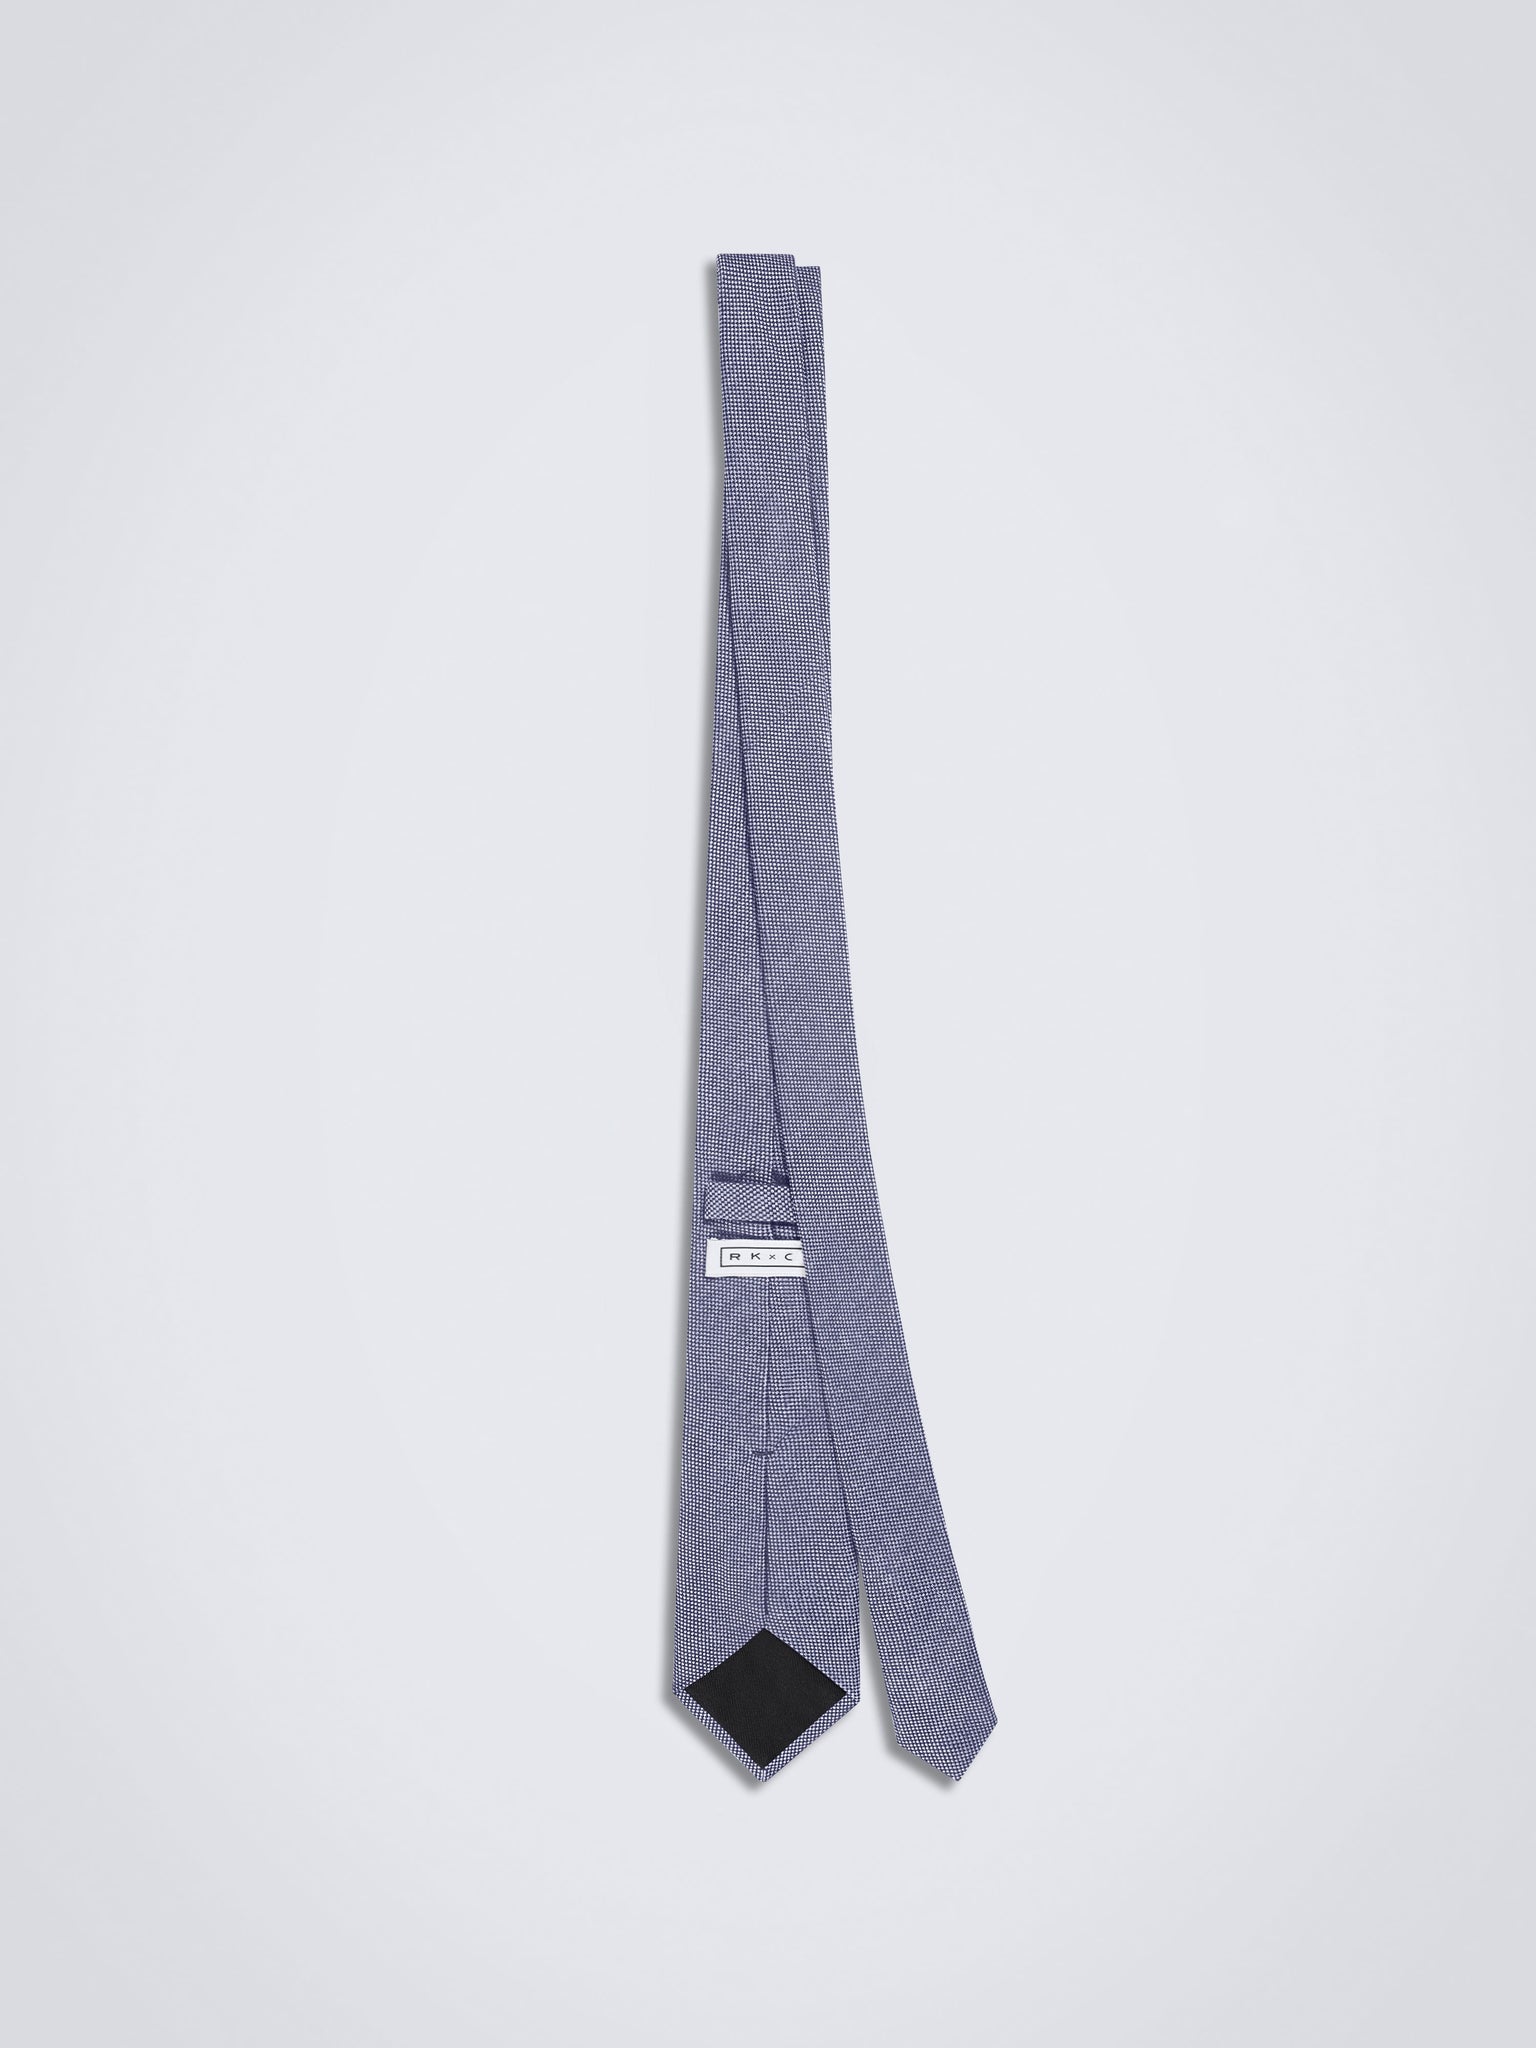 La Piscine - Necktie